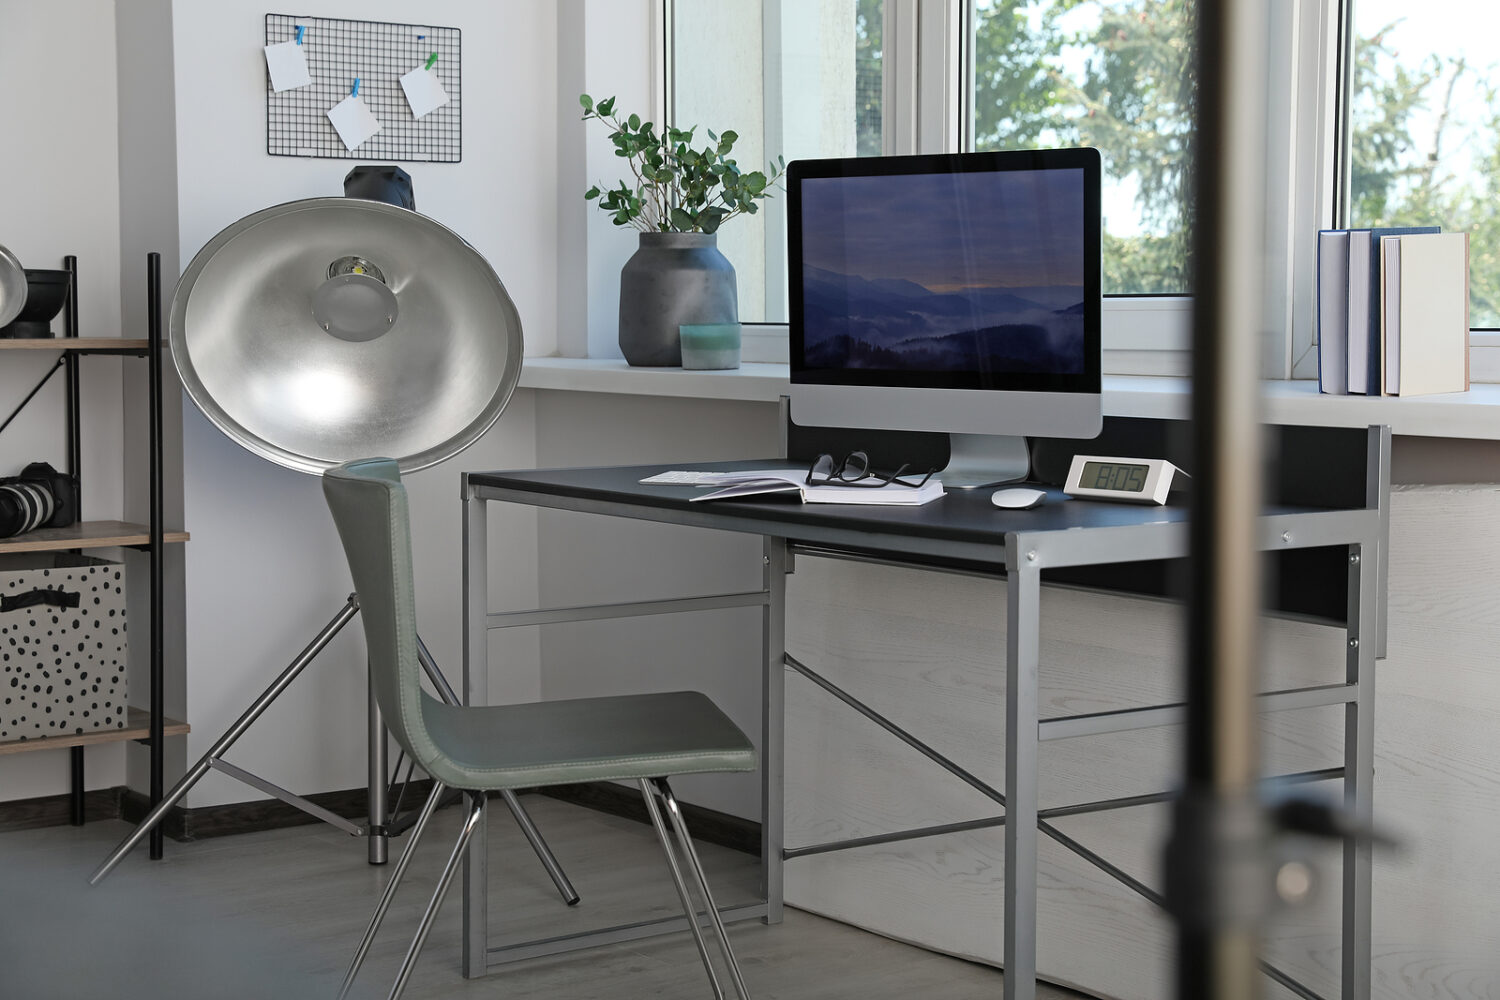 Professional lighting equipment and comfortable workplace in photo studio. Interior design